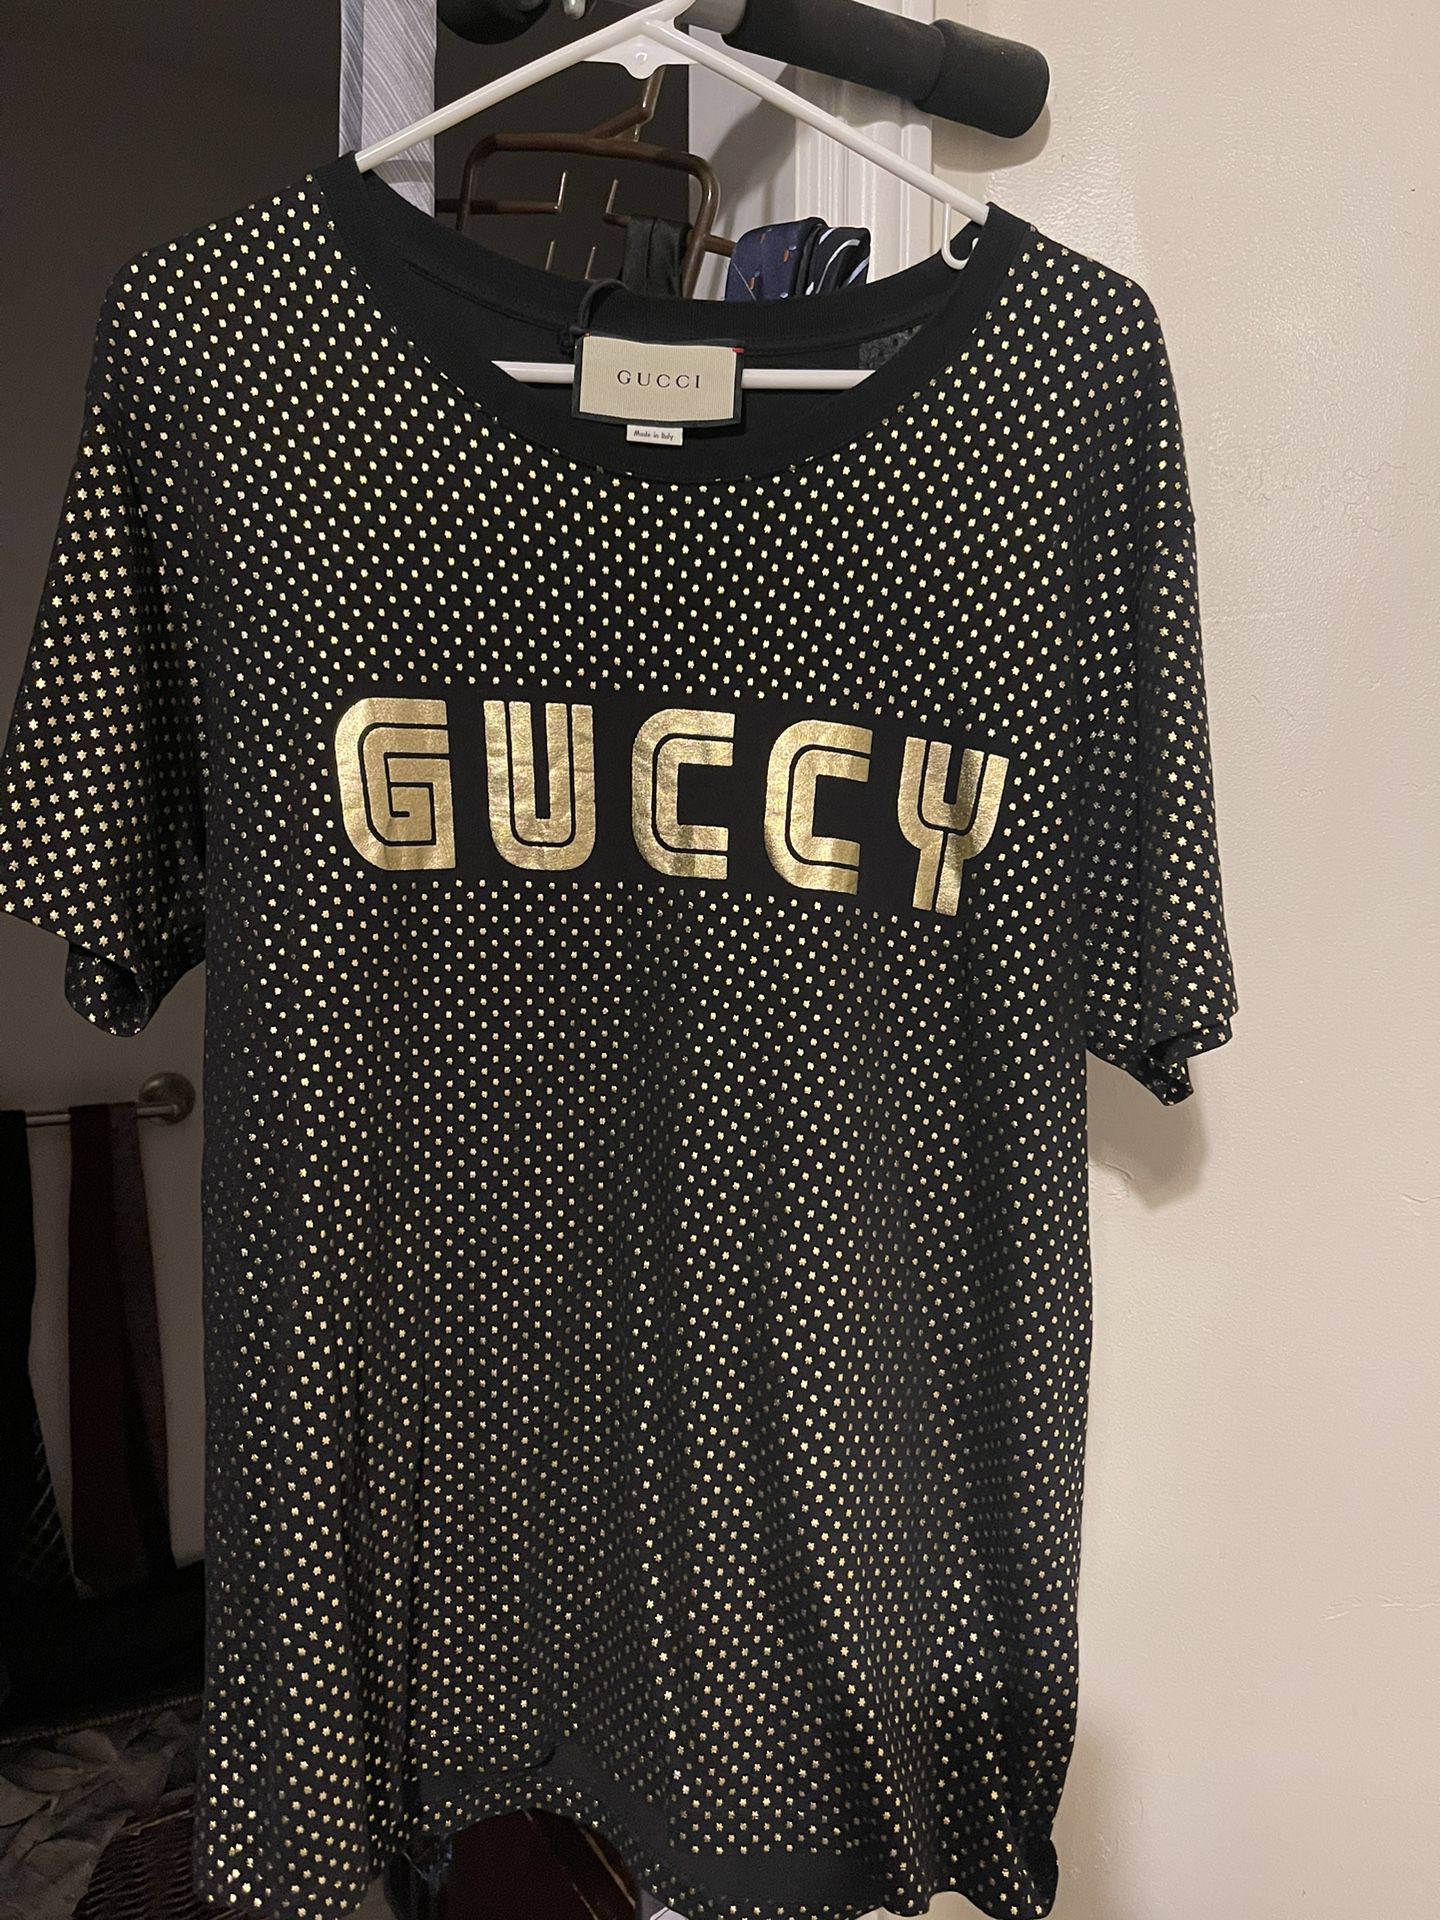 Gucci Shirt  MENS MEDIUM   (TRADES WELCOMED)